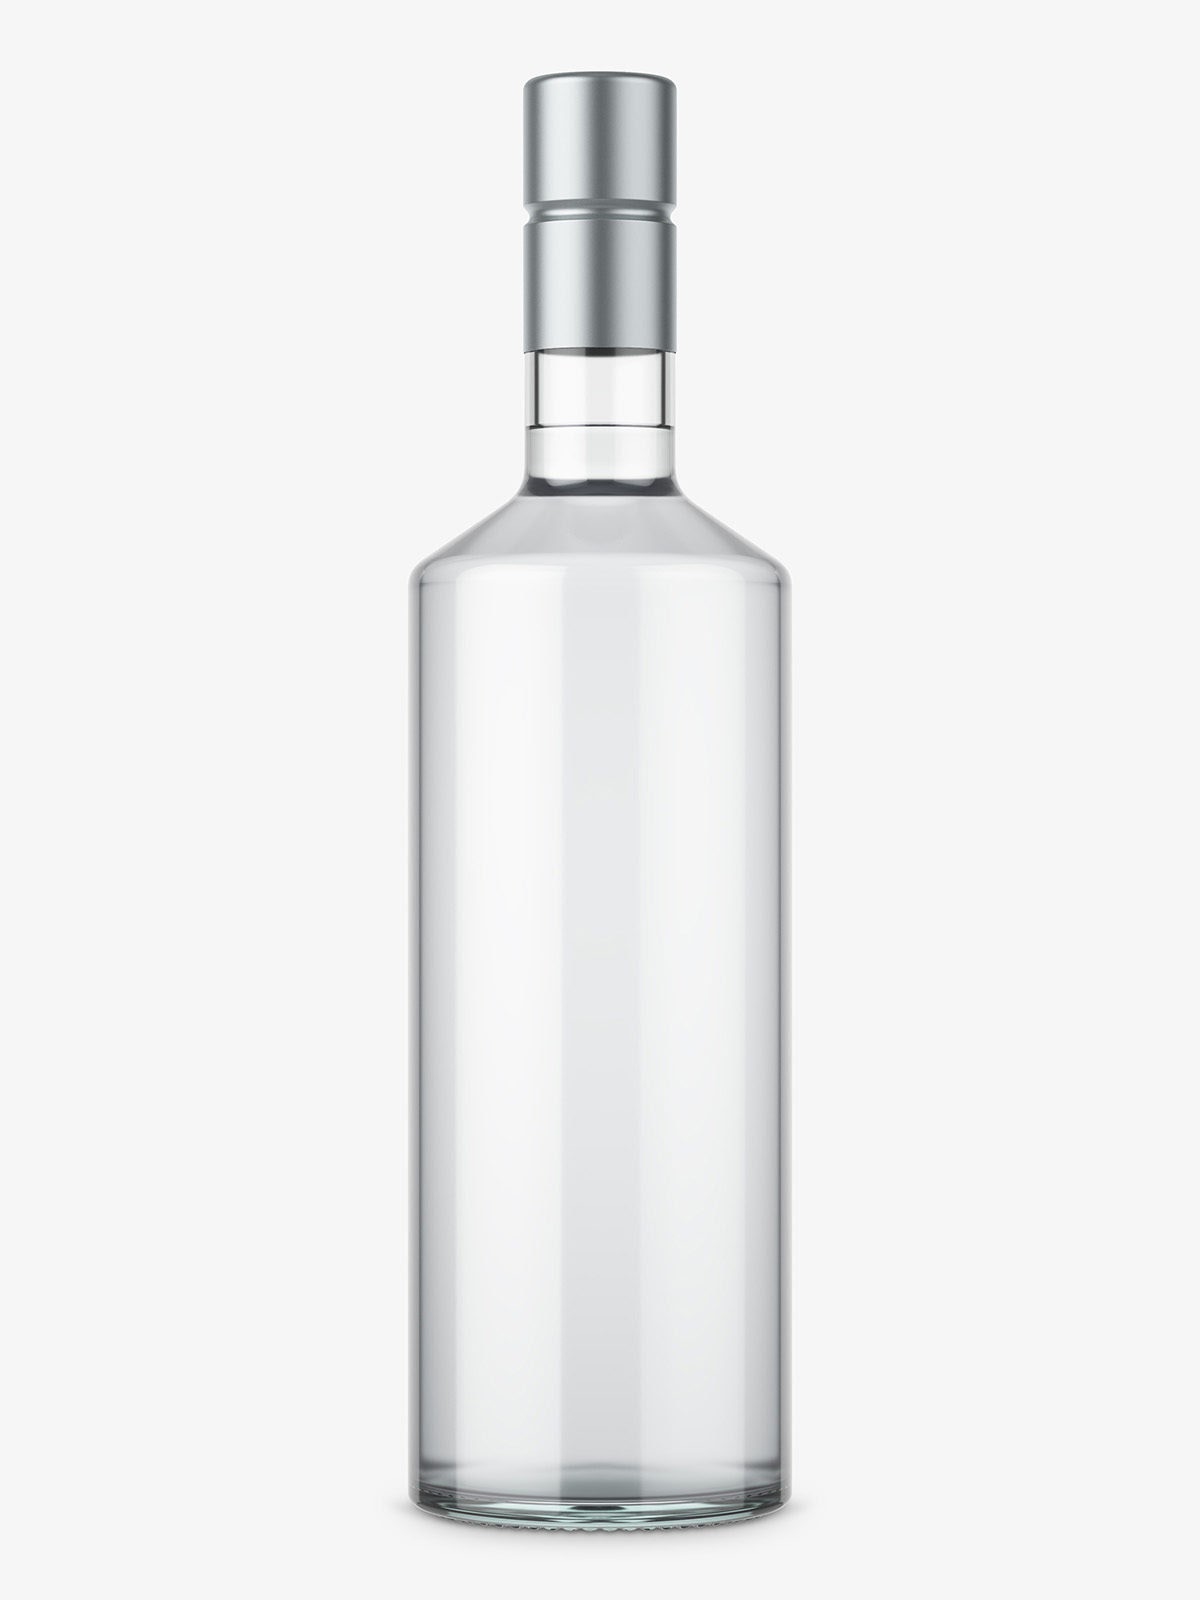 Download Bottle Vodka Mockup Free - Free Vodka Bottle Branding ...